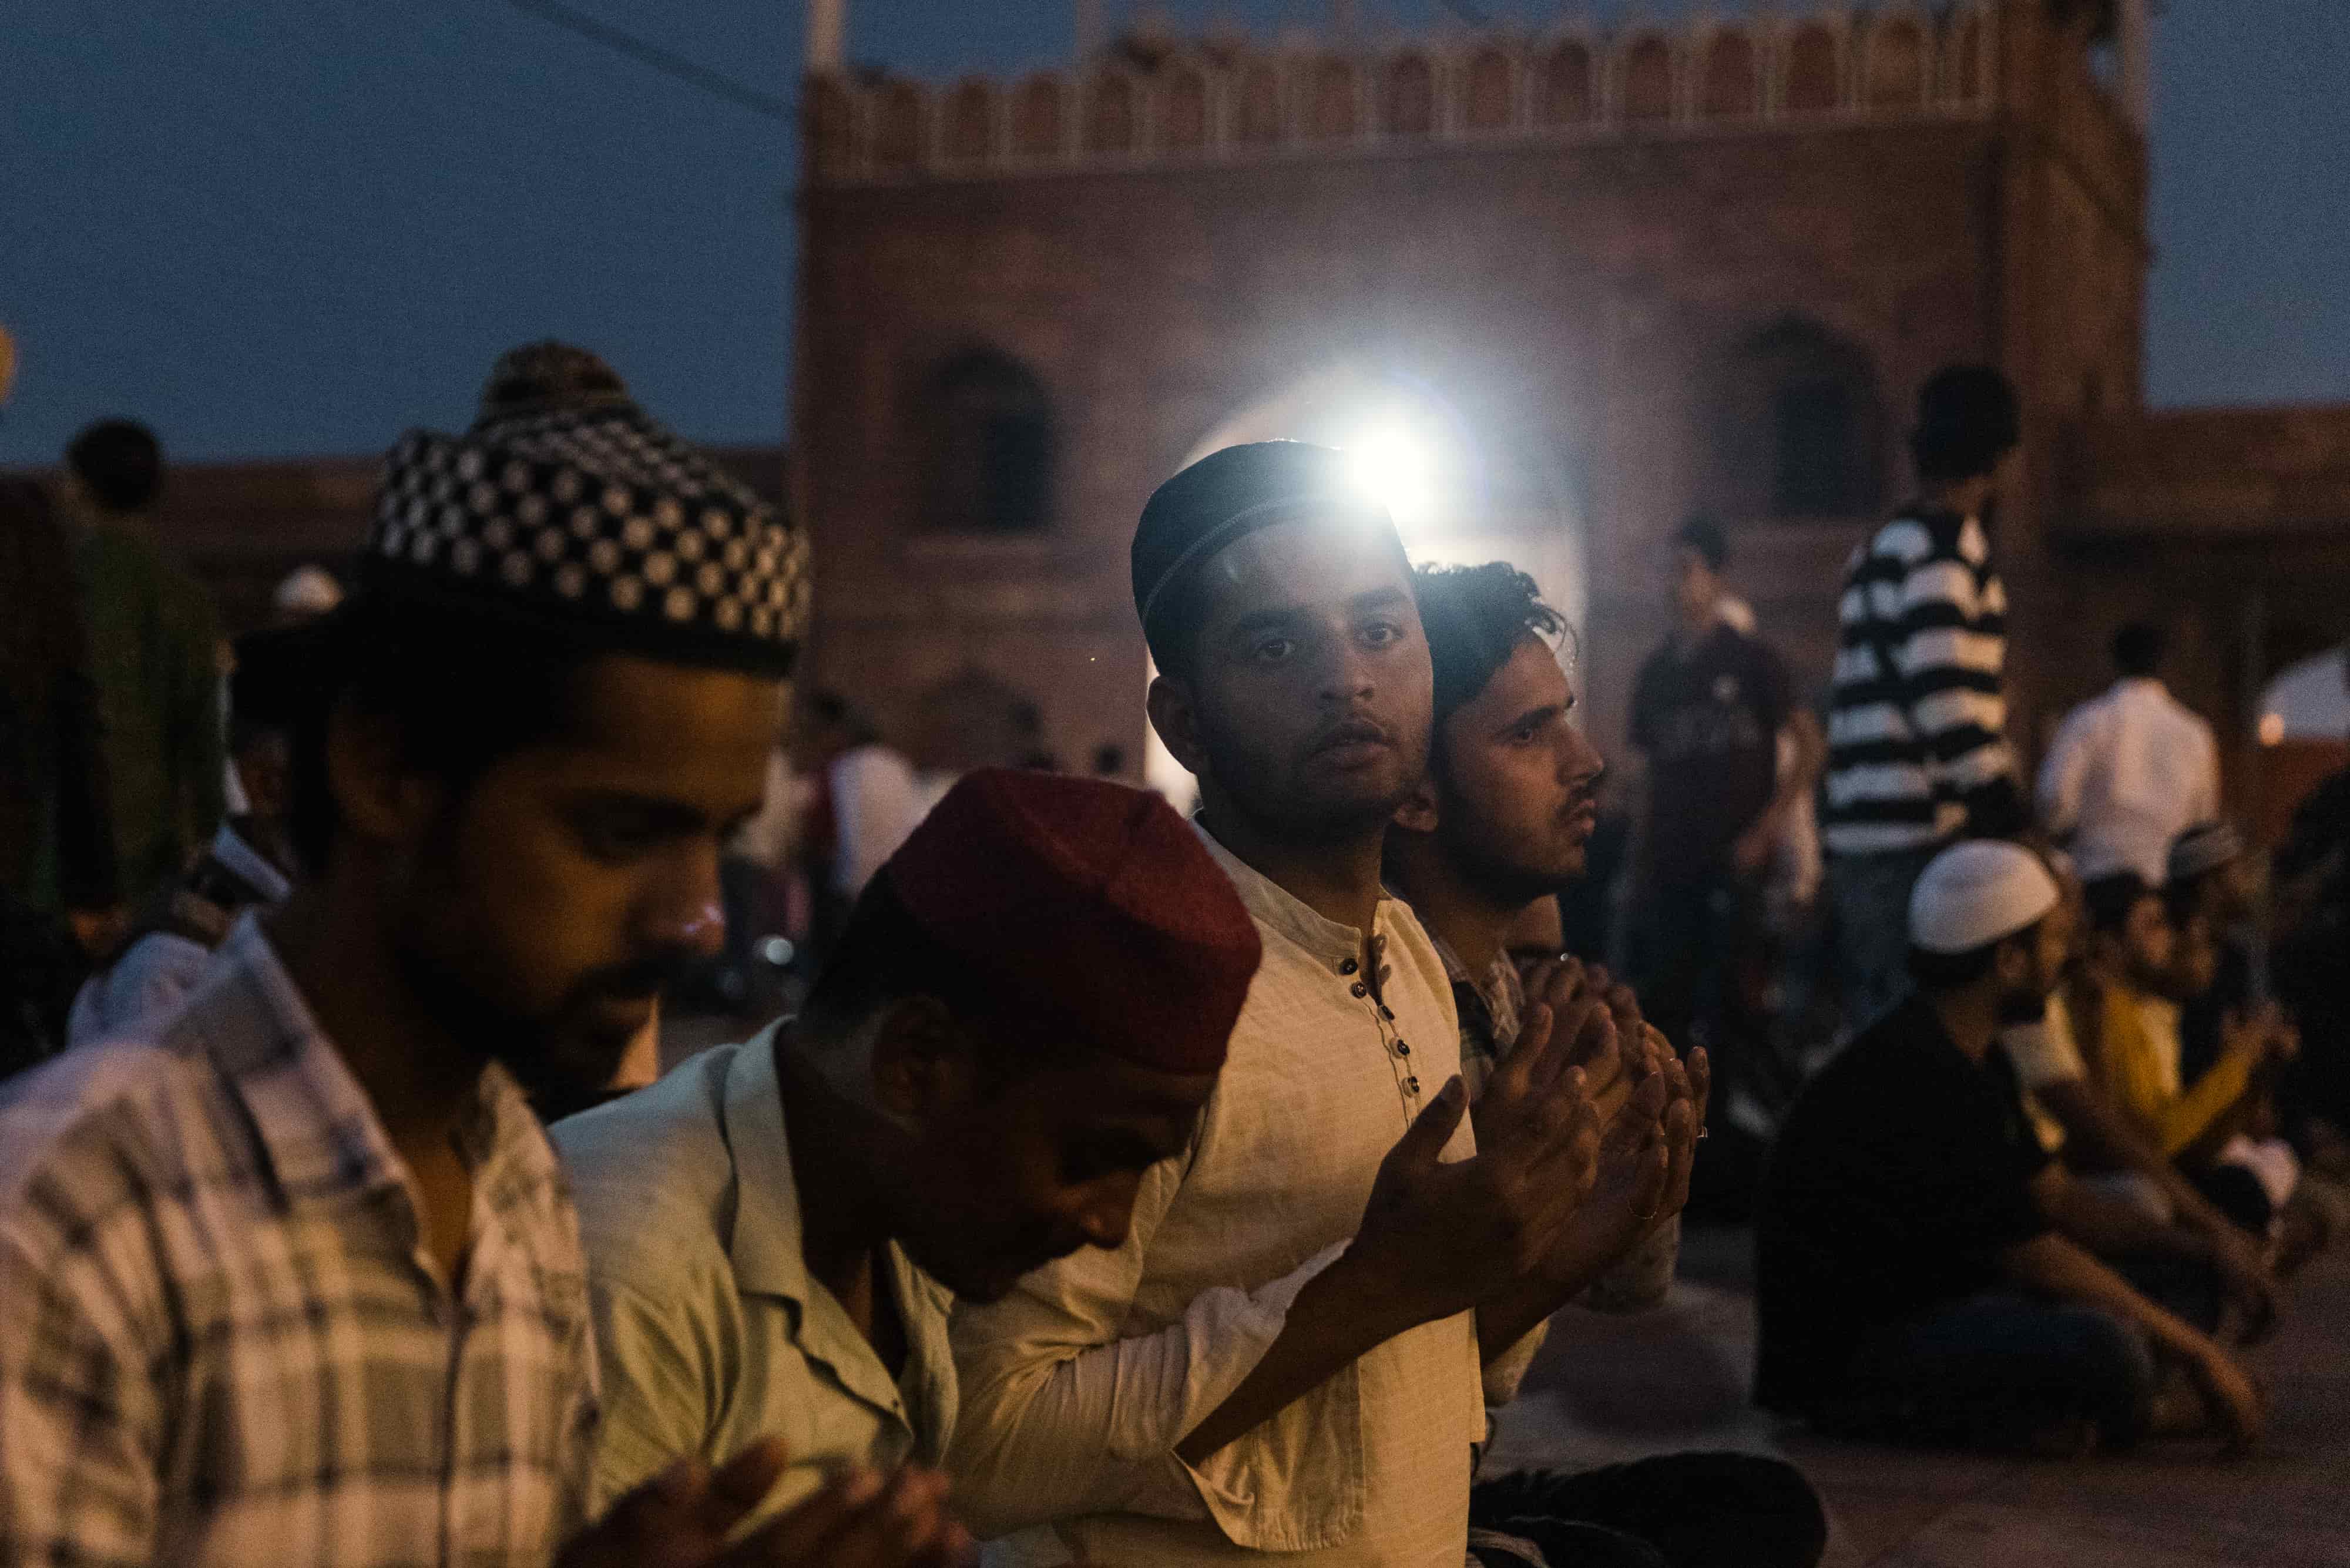 Report: Anti-Muslim Hate Speech Surges in India